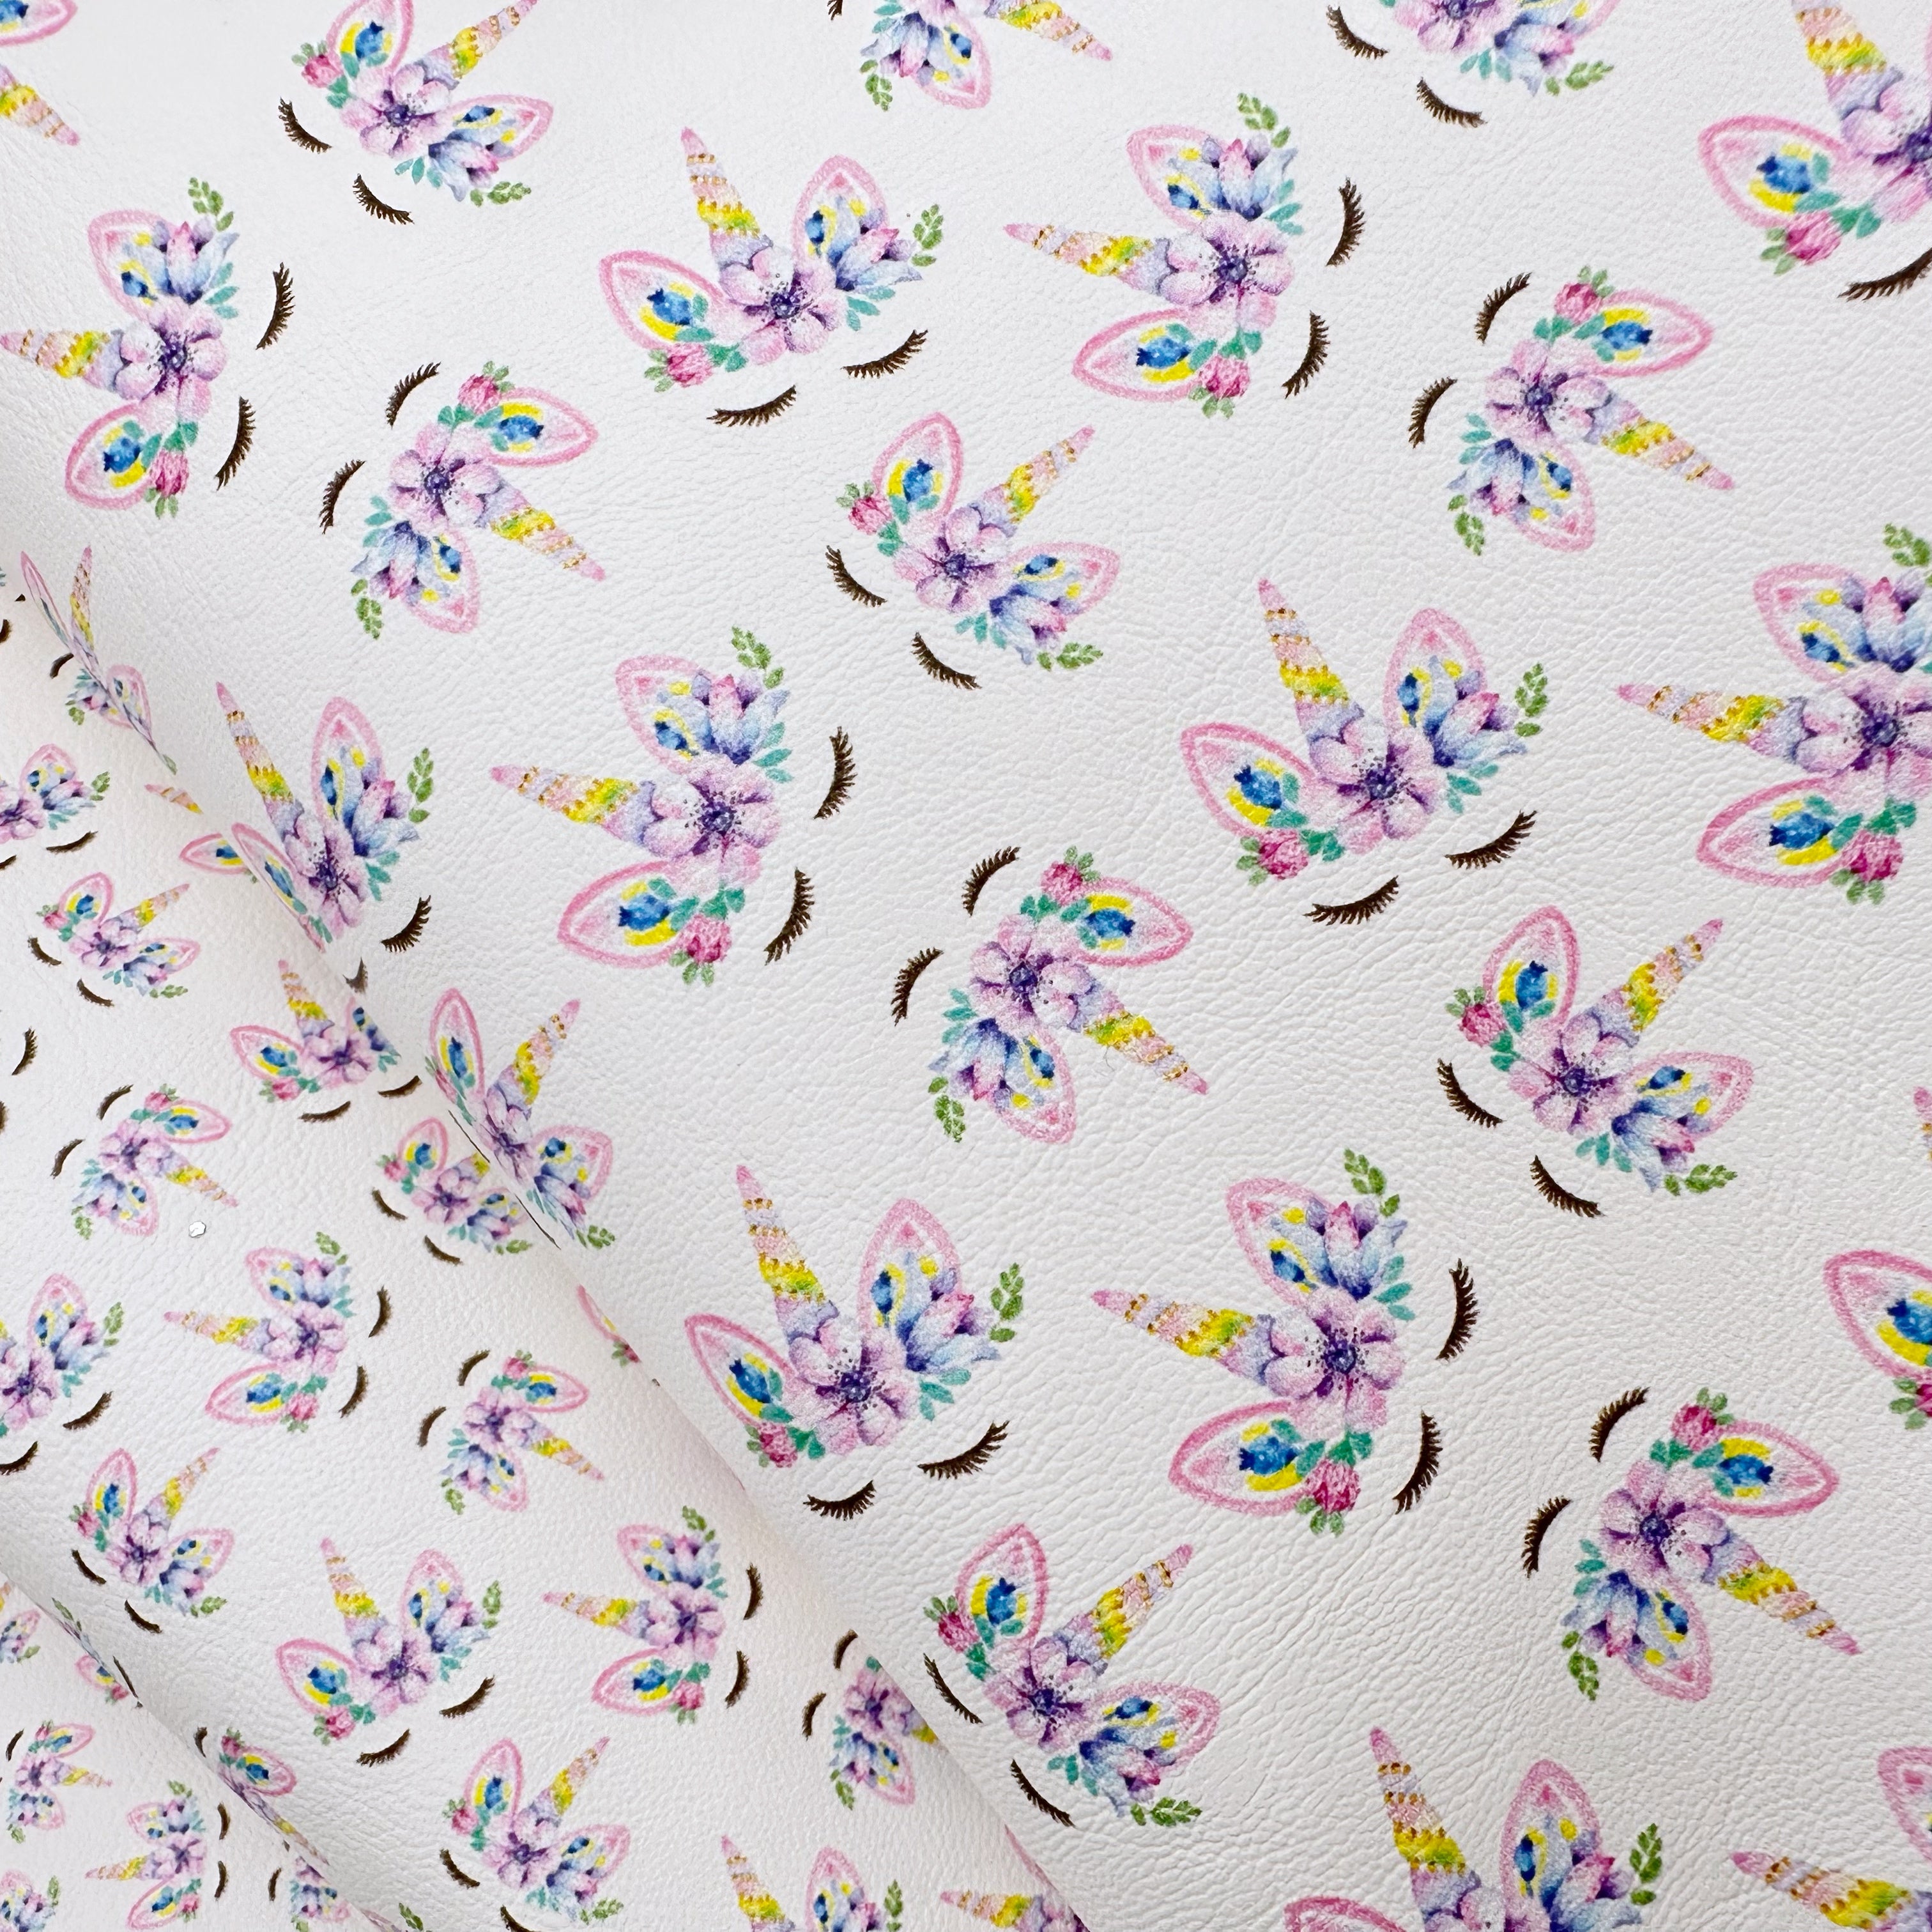 Sleepy Unicorn Mix Up- Multi Directional- Premium Faux Leather Fabric Sheets